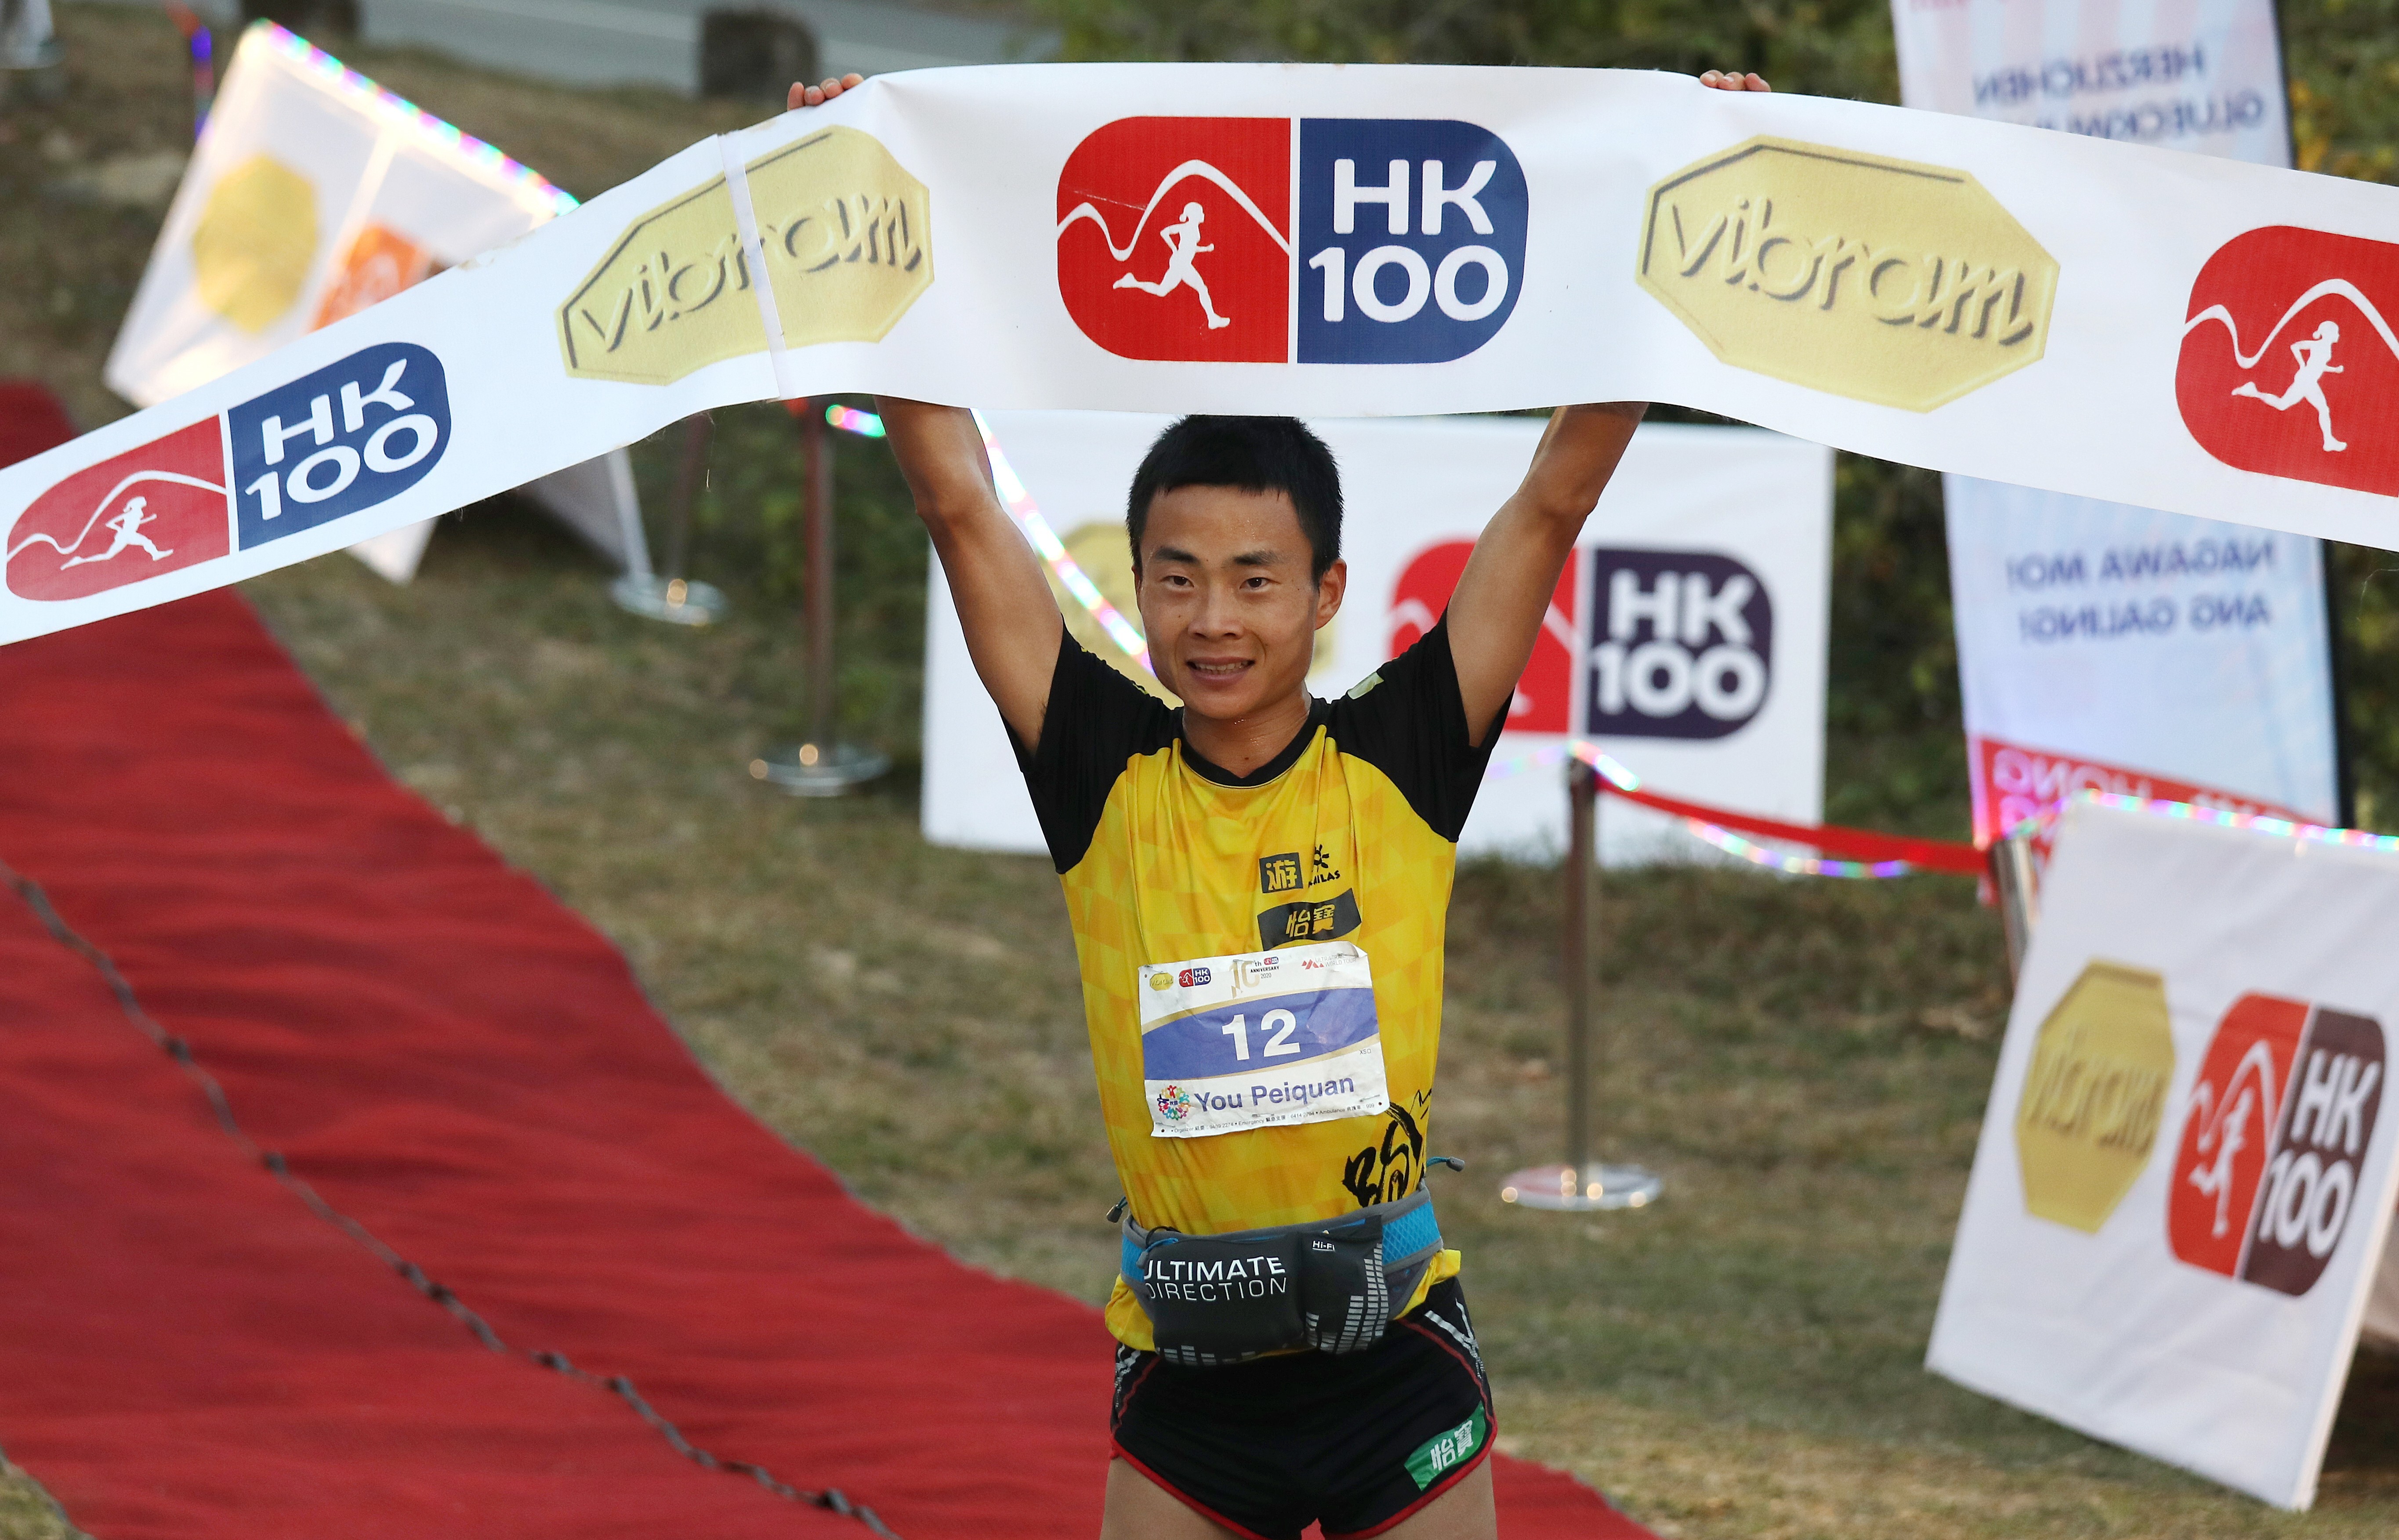 You Peiquan, winner of the Hong Kong 100 2020. The 2021 edition has been cancelled. Photo: Xiaomei Chen